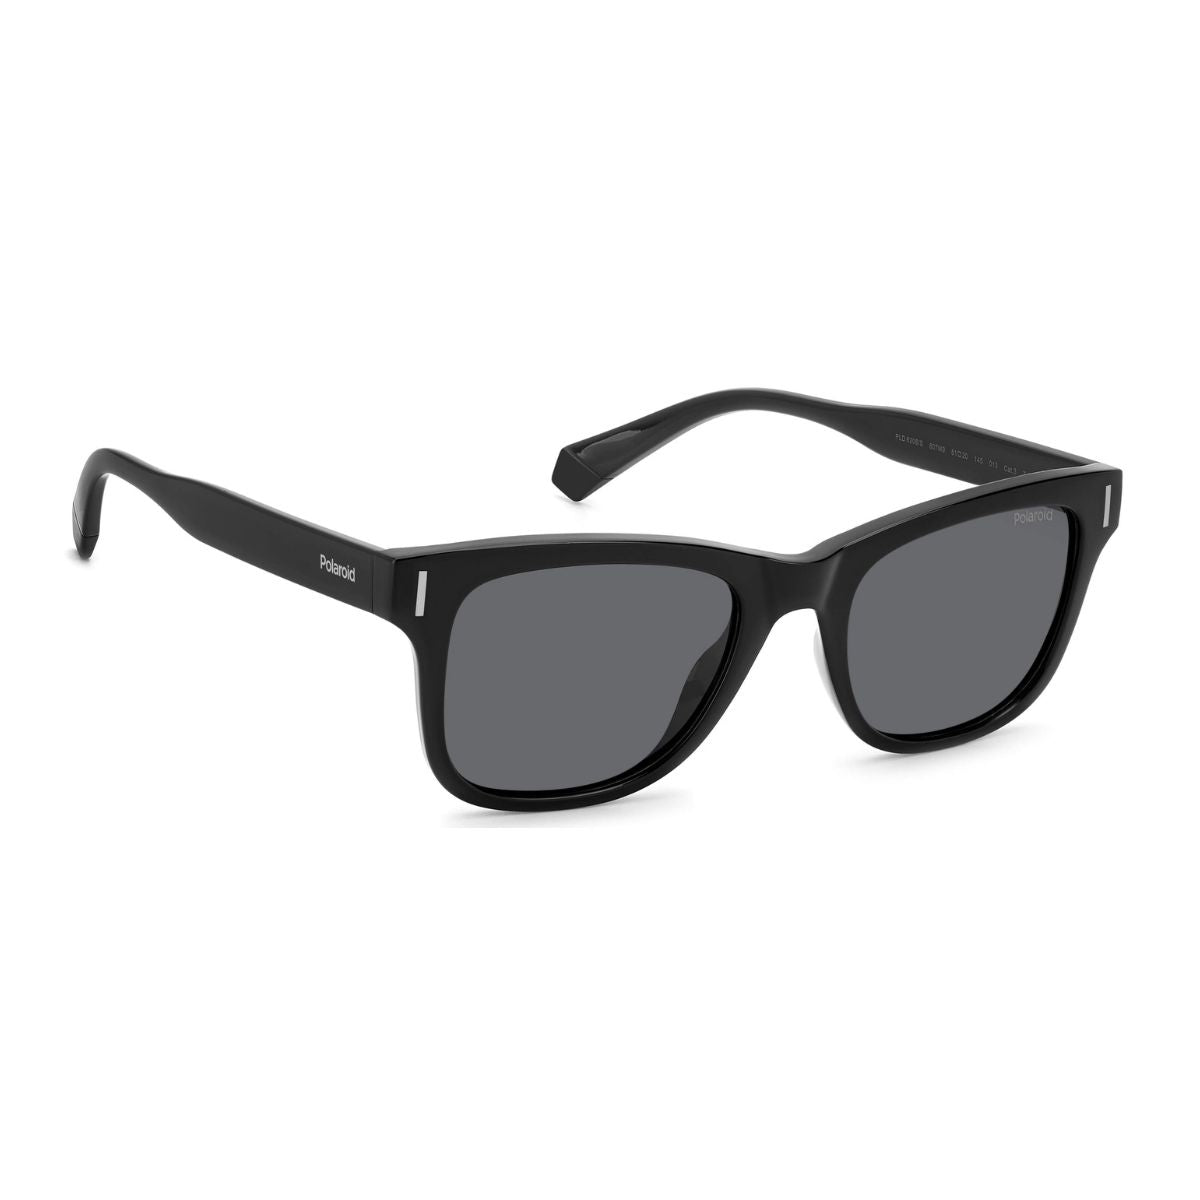 "Polaroid 6206/S 807M9 polarized Square Sunglasses For Men and Women Online At Optorium"